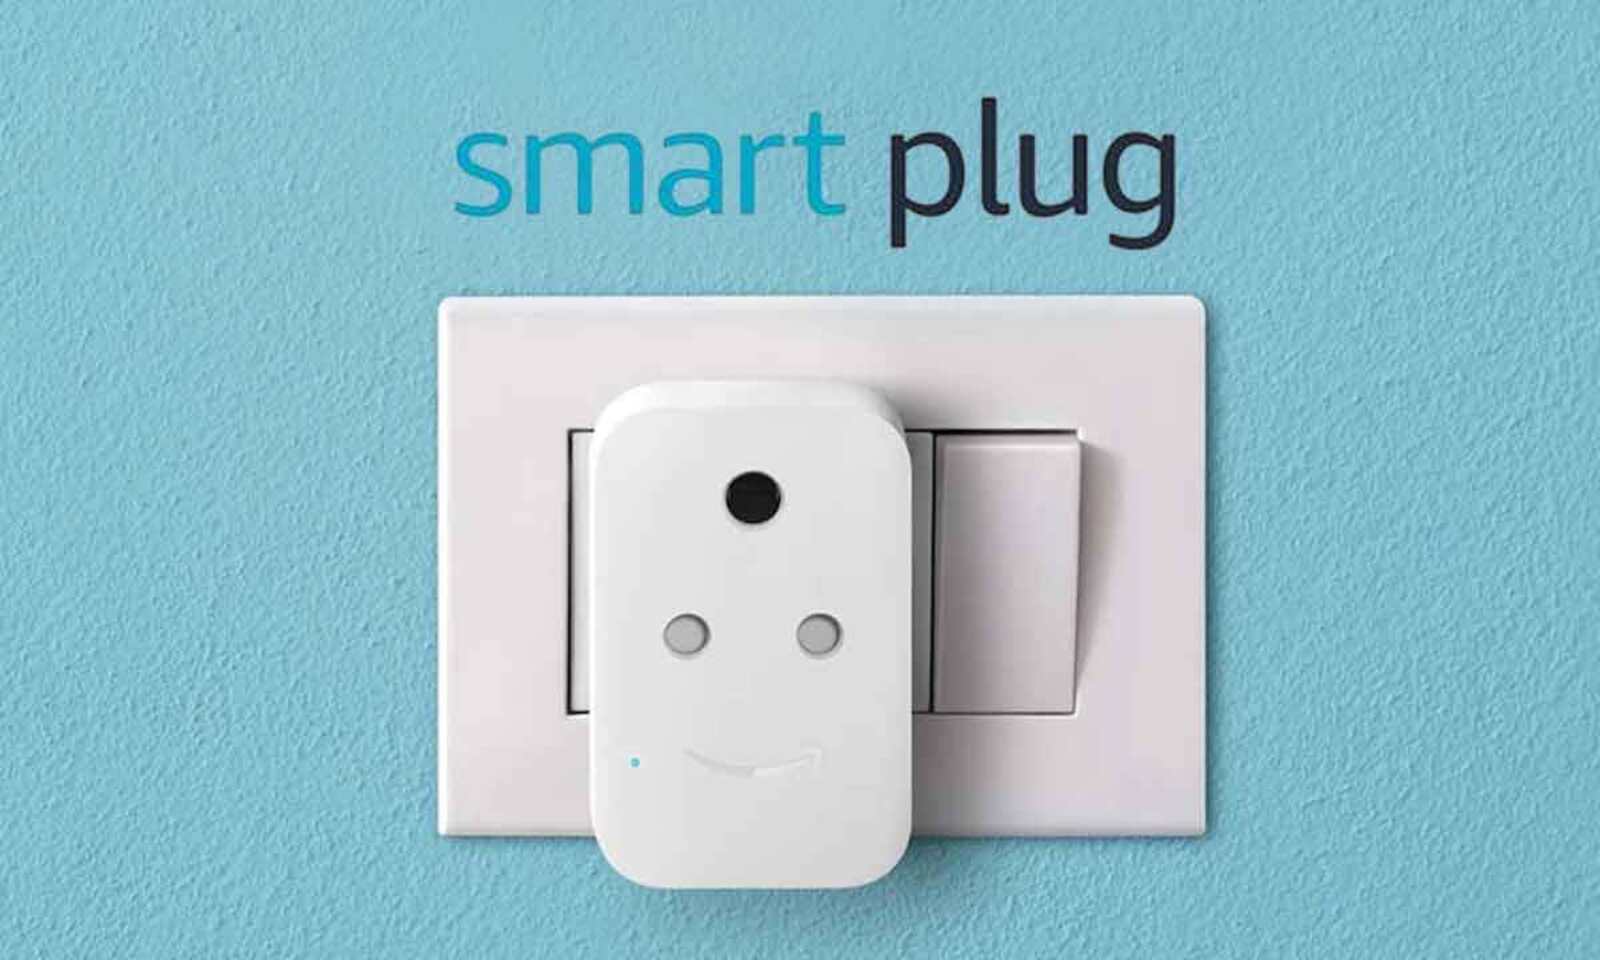 Home Automation: Make your Home Smart with Wi-Fi Smart Plug